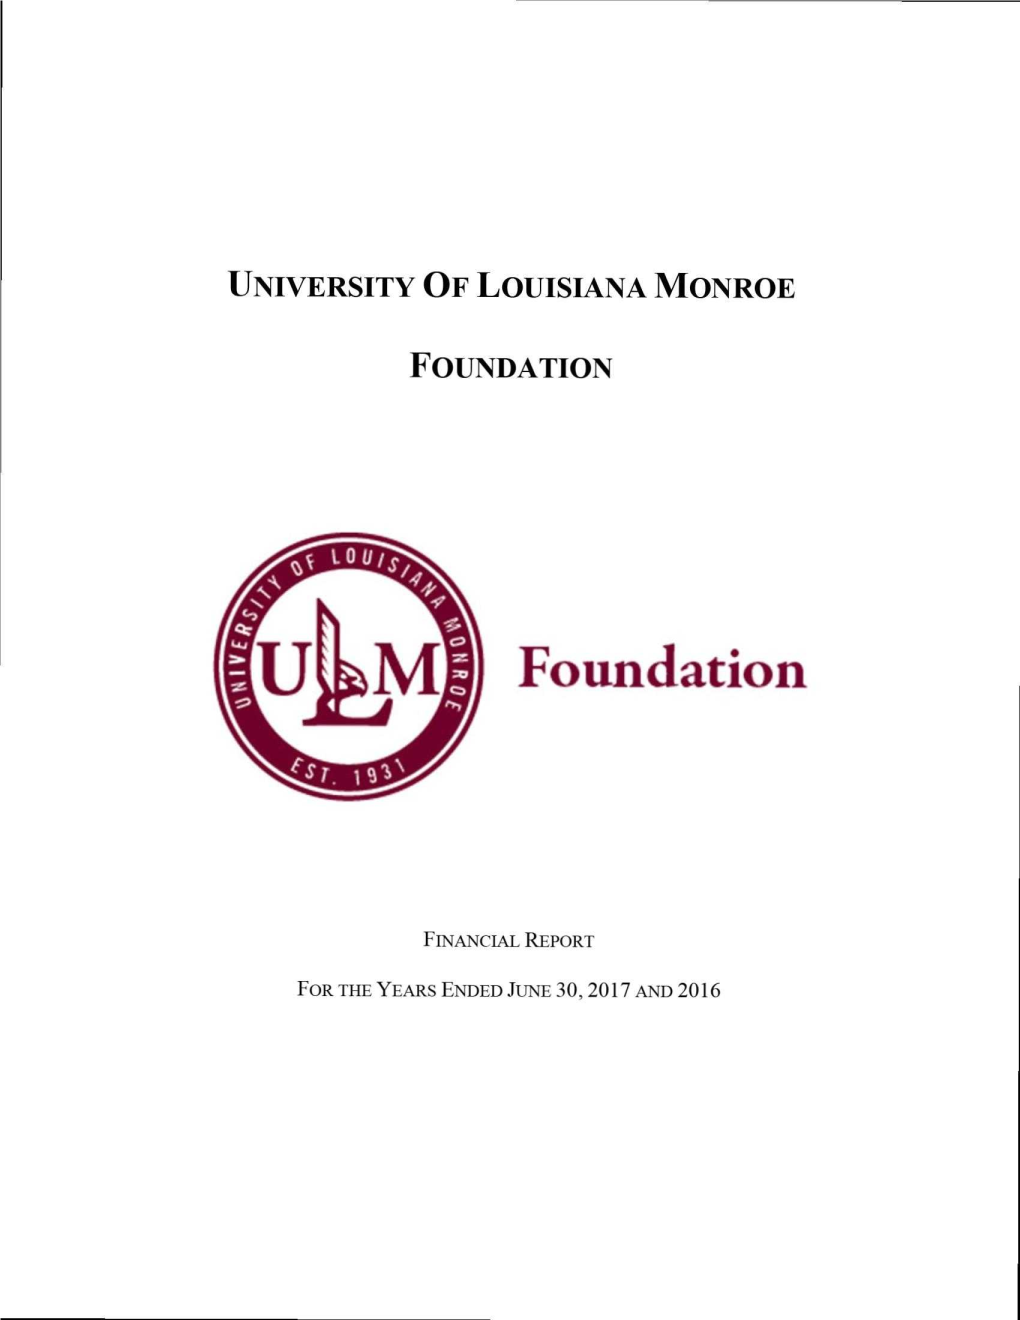 University of Louisiana at Monroe Foundation